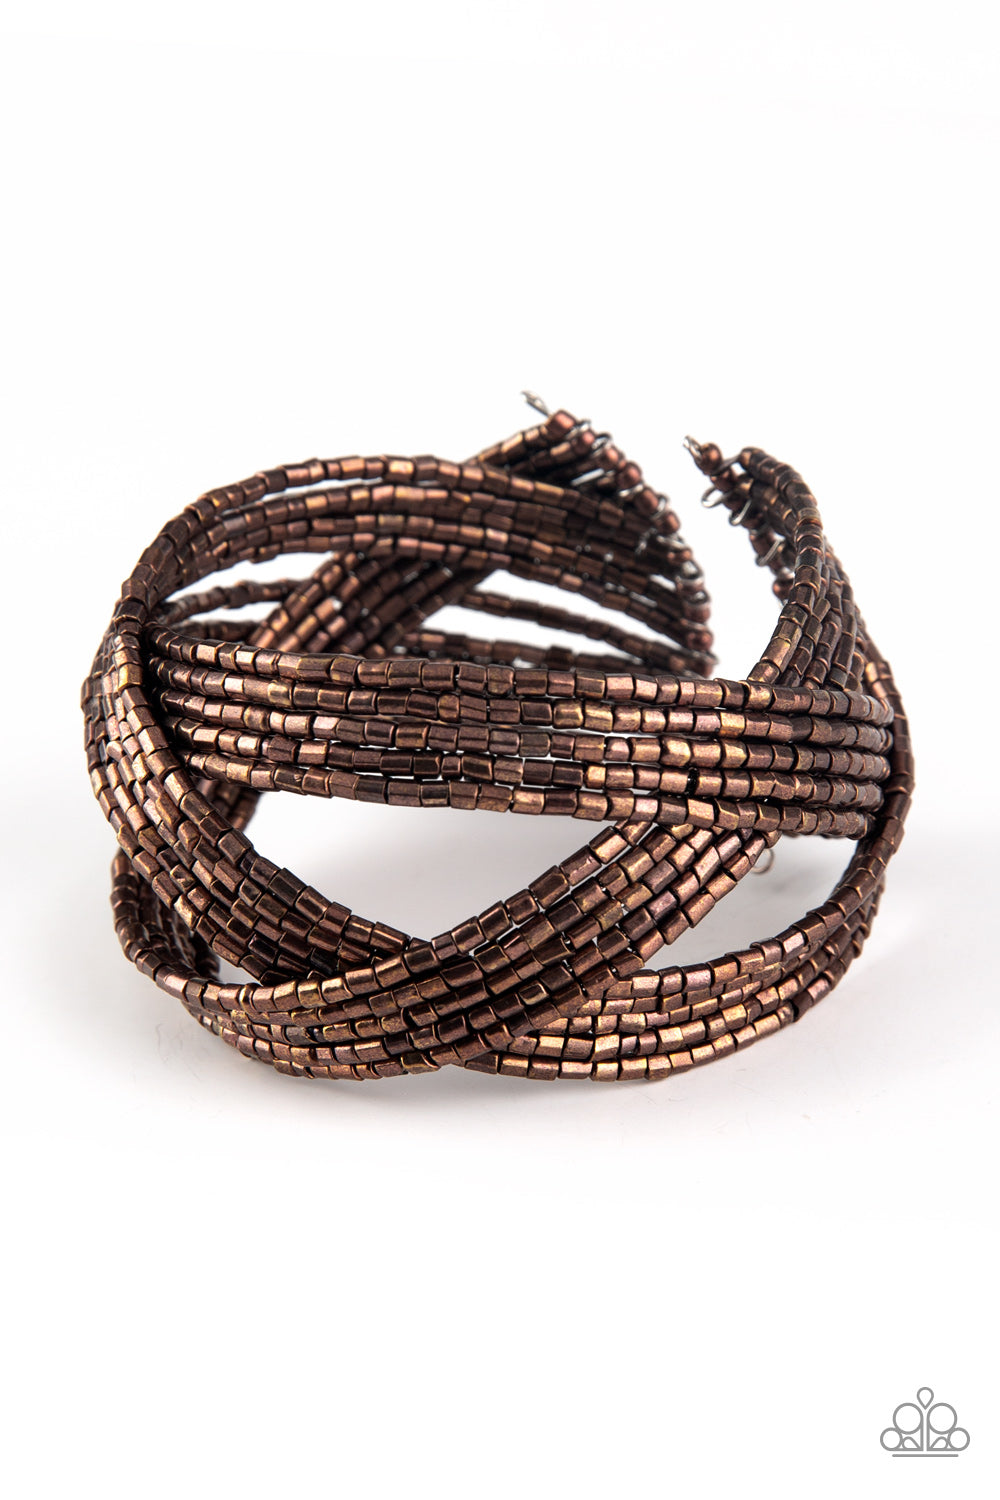 Shooting Stars - Copper seed bead cuff bracelet